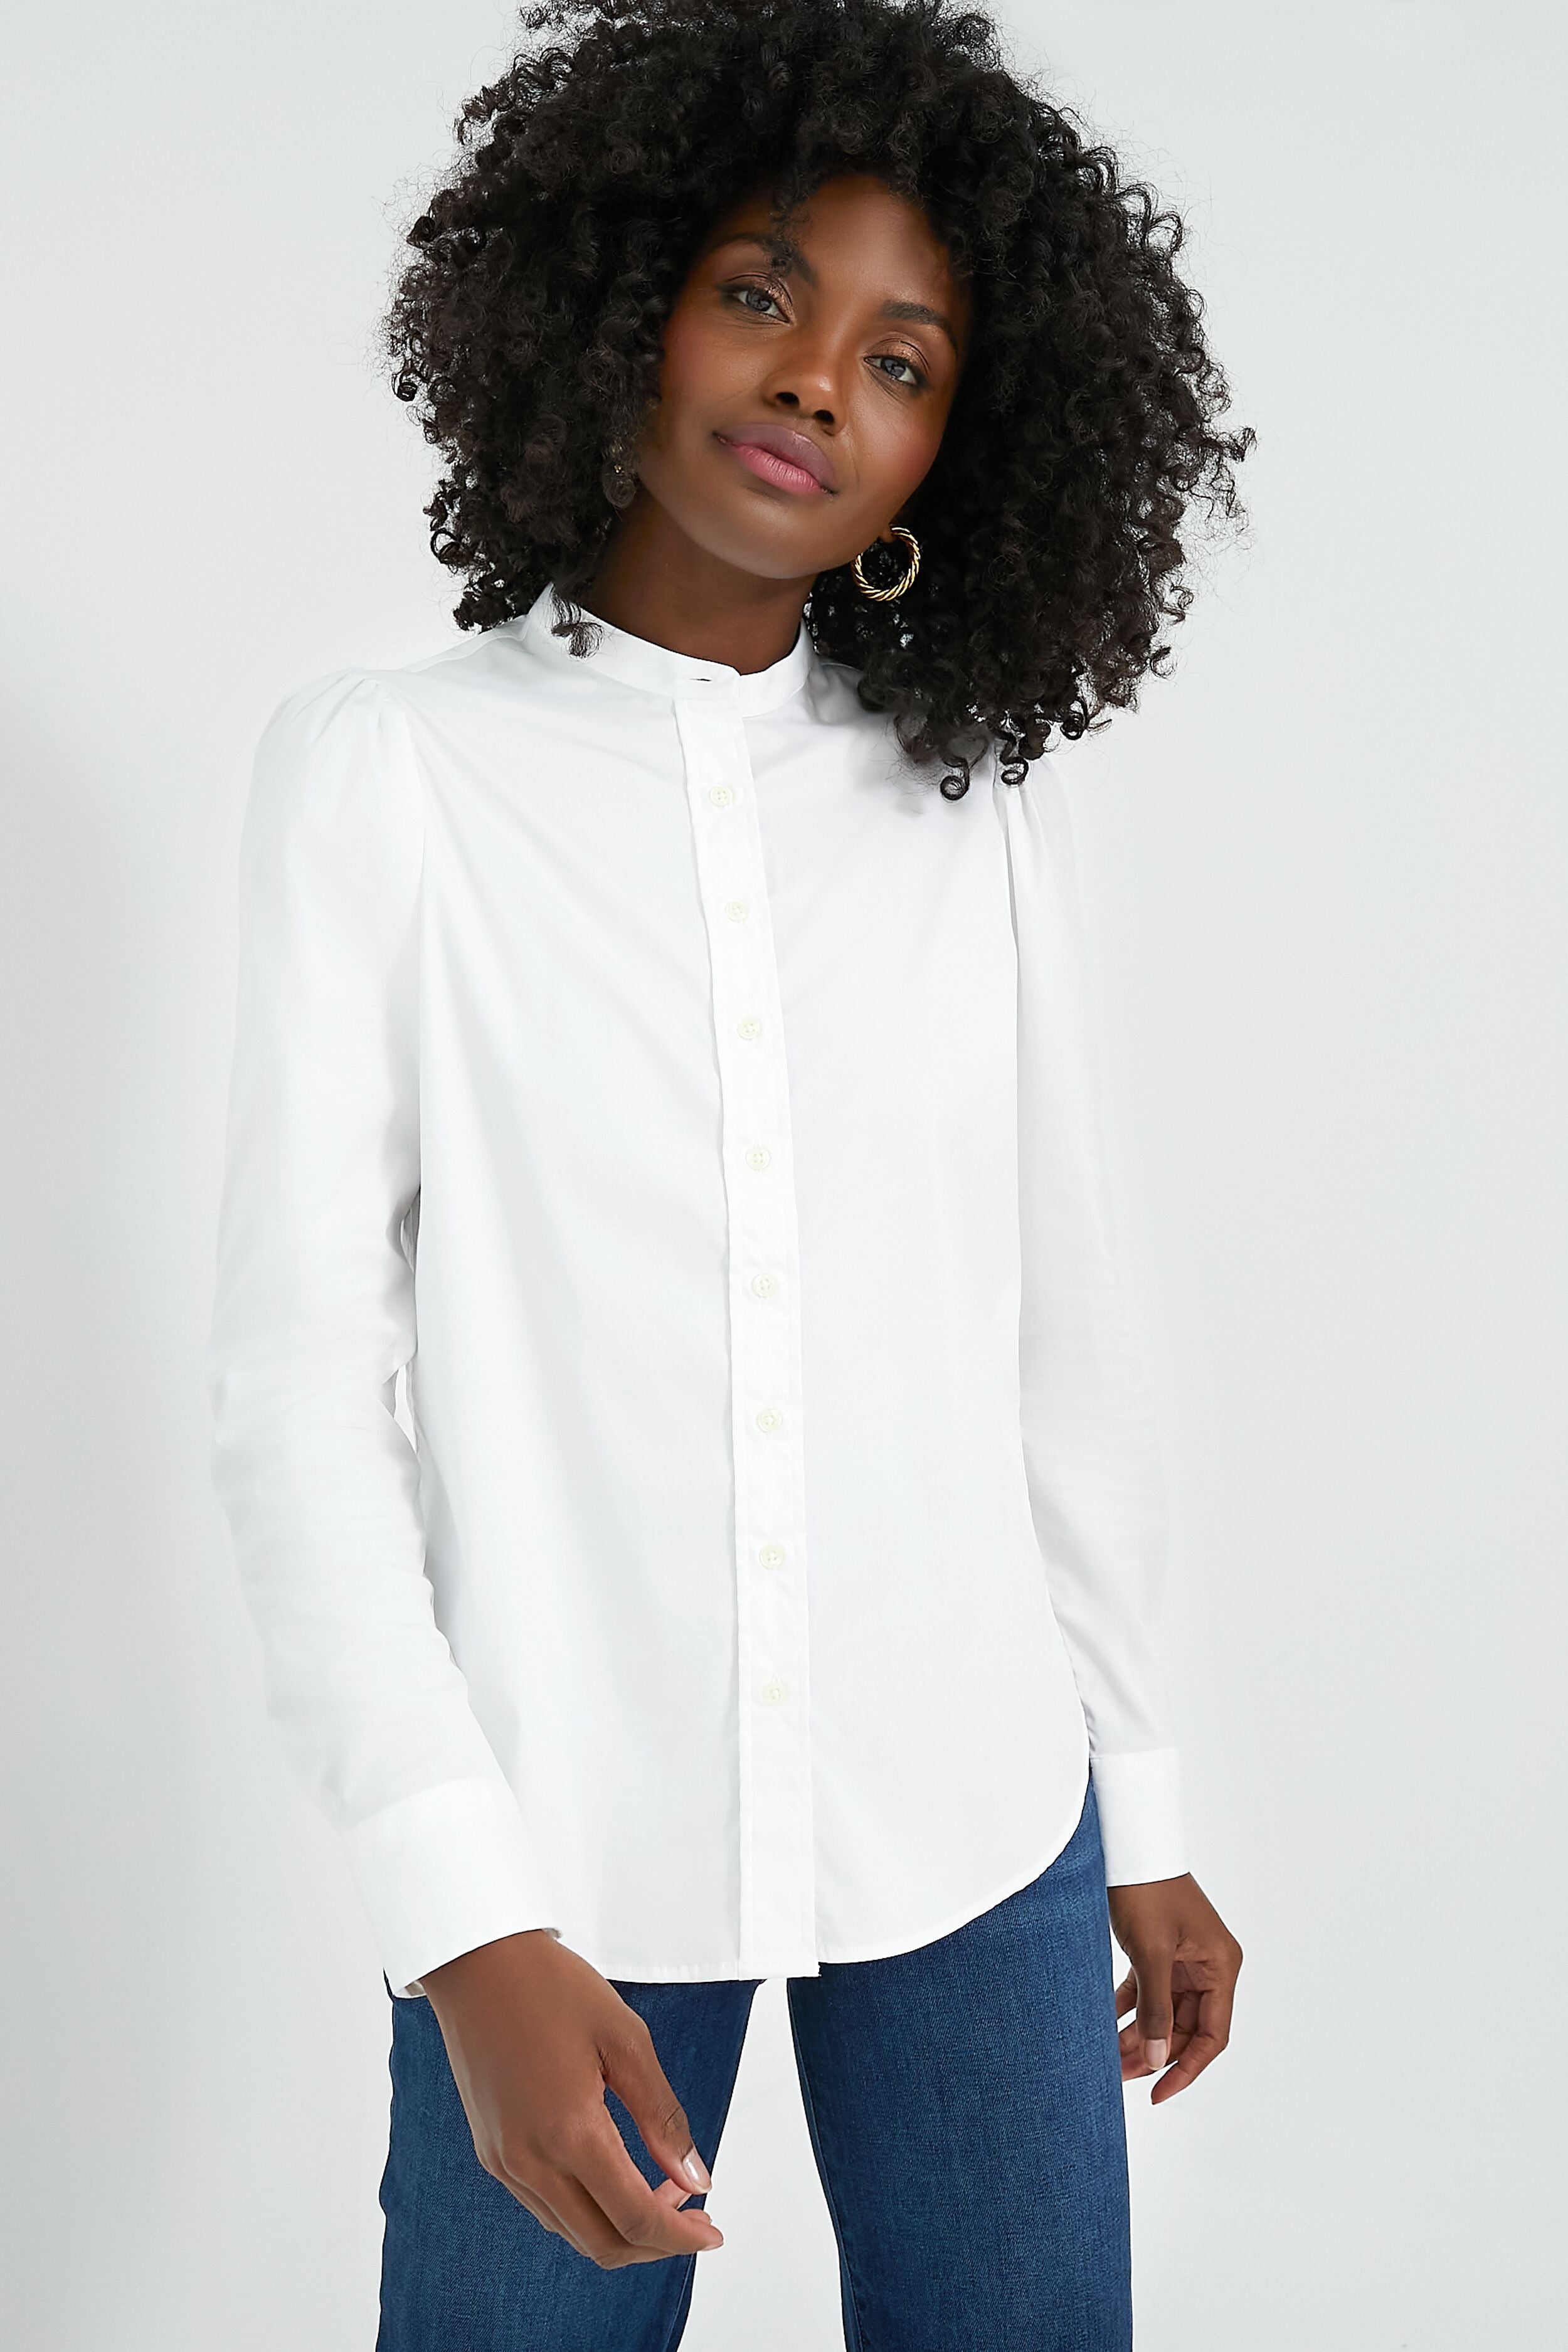 The Shirt Rochelle Behrens, White Button Down Shirts